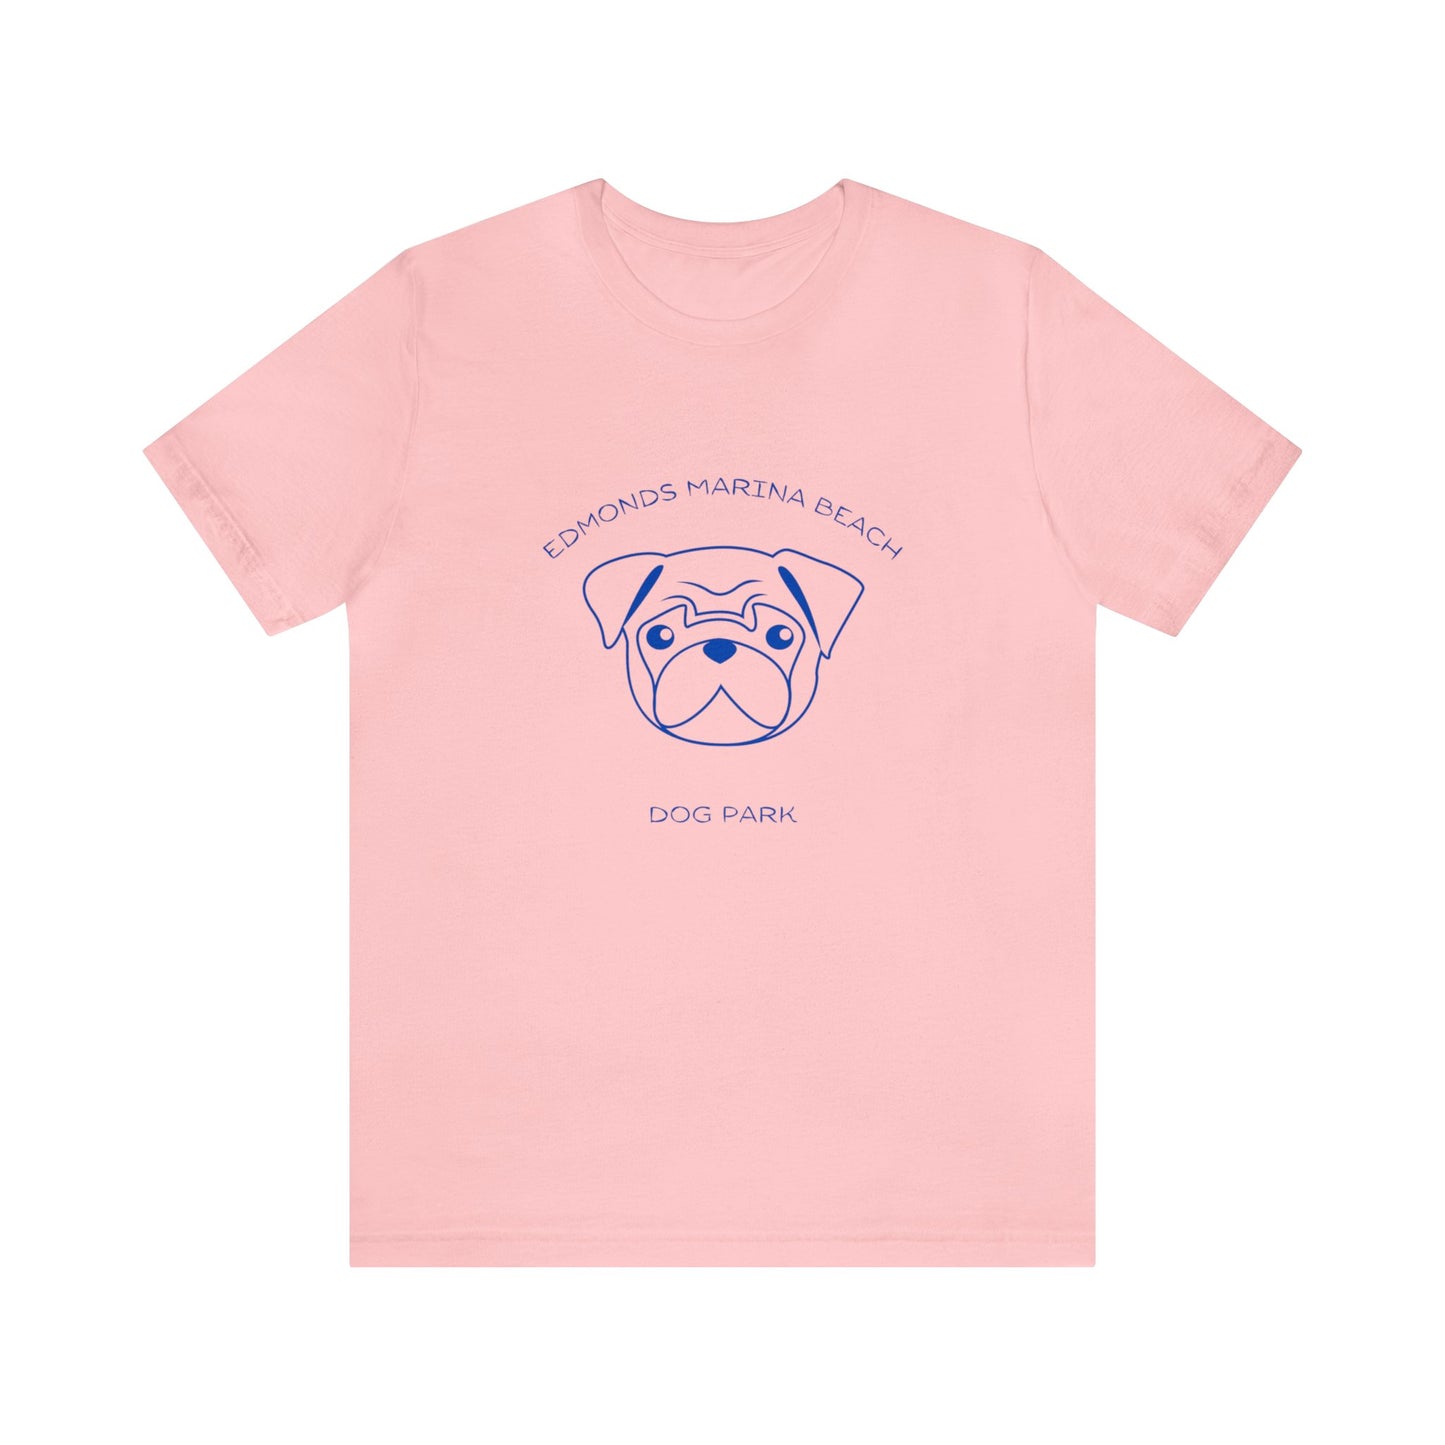 Edmonds Dog Park Pug T-shirt